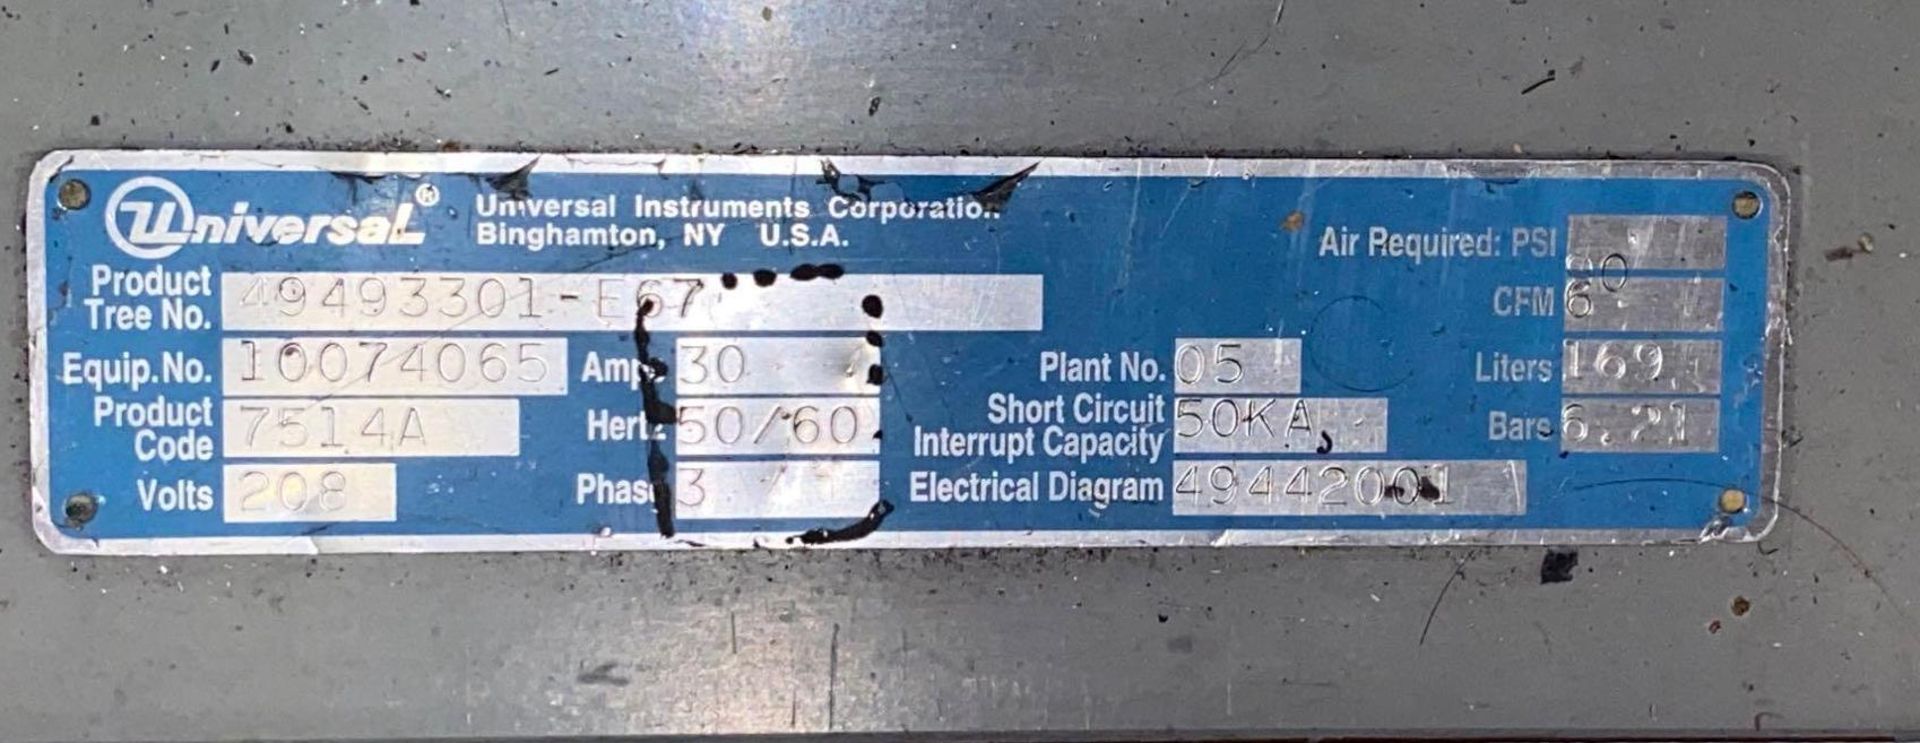 Universal Instruments Polaris # 7514A Handler / Inspection Unit - Image 10 of 10